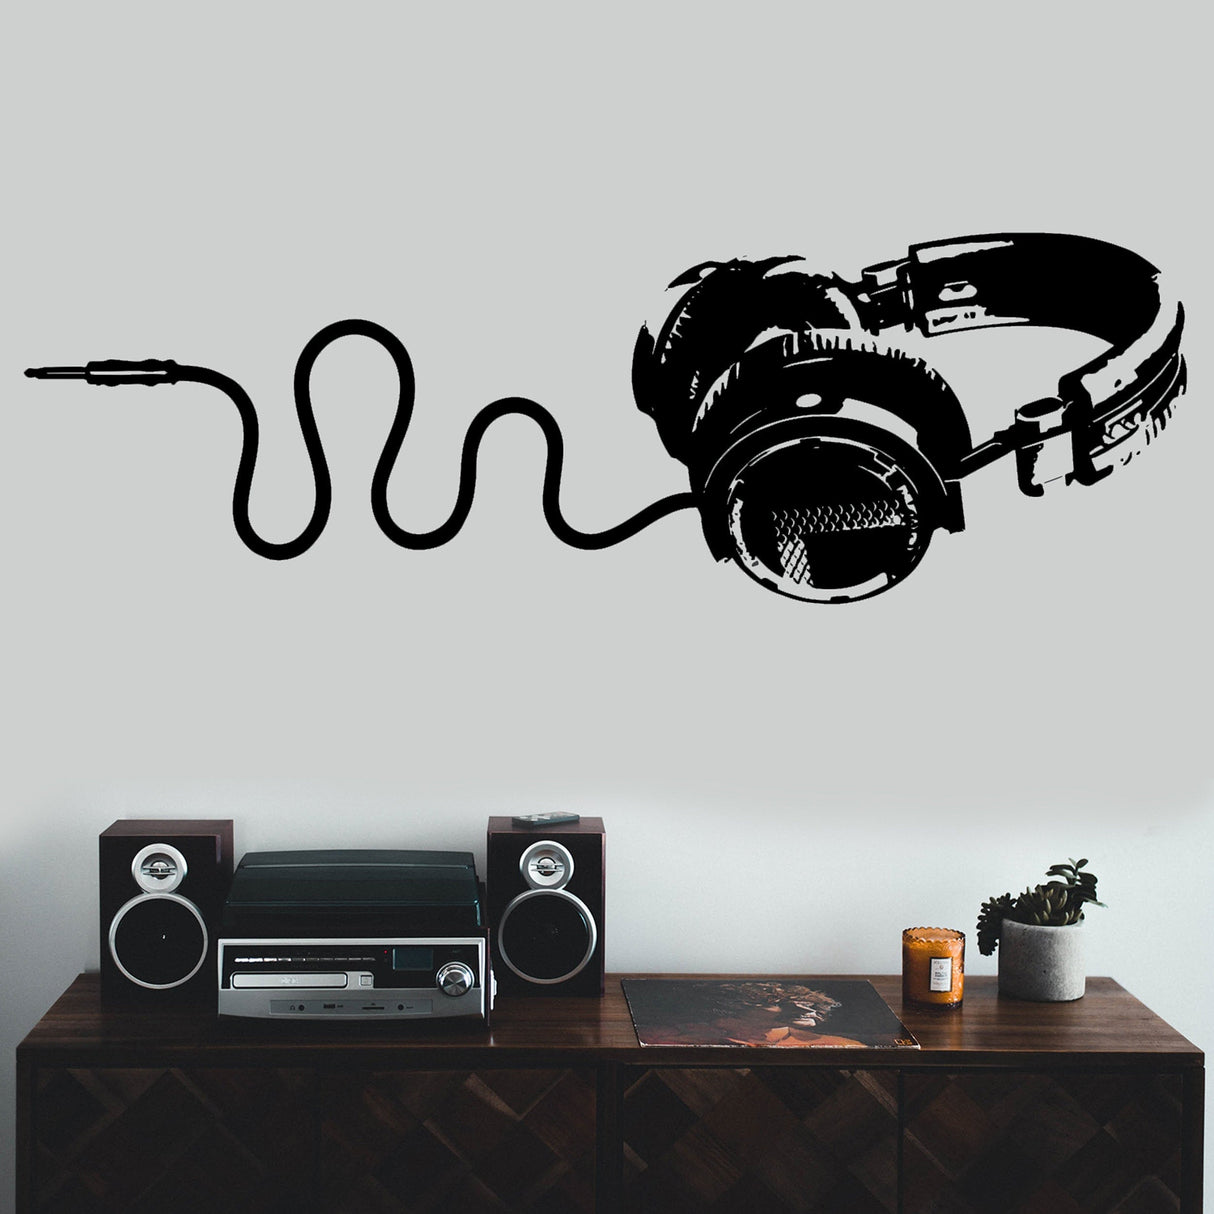 Music Wall Decal Decor - Vinyl Dj Headphones Sticker For Teen Boy Room